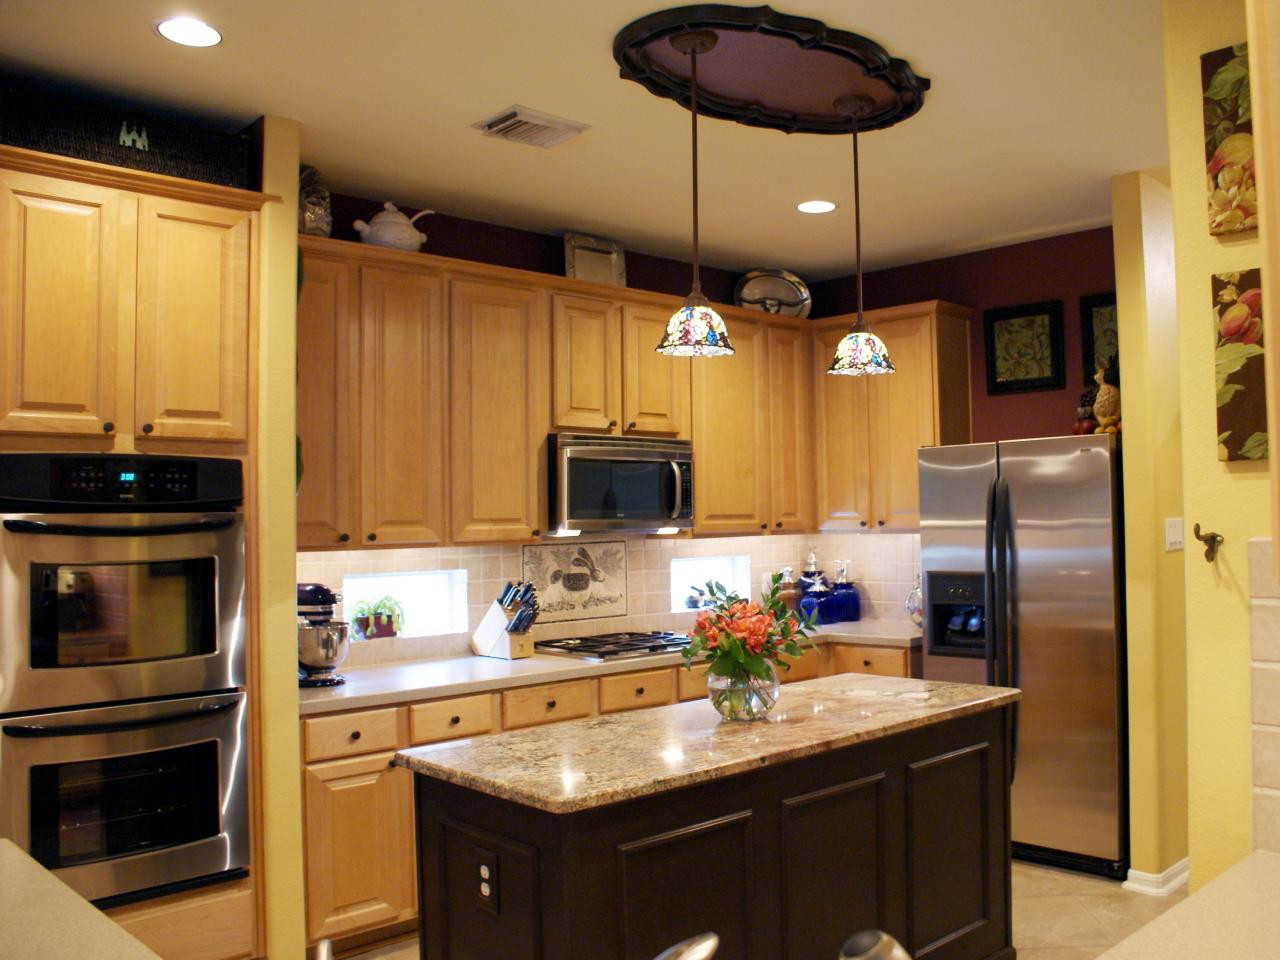 Best ideas about Reface Kitchen Cabinets DIY
. Save or Pin Diy Reface Kitchen Cabinets Now.